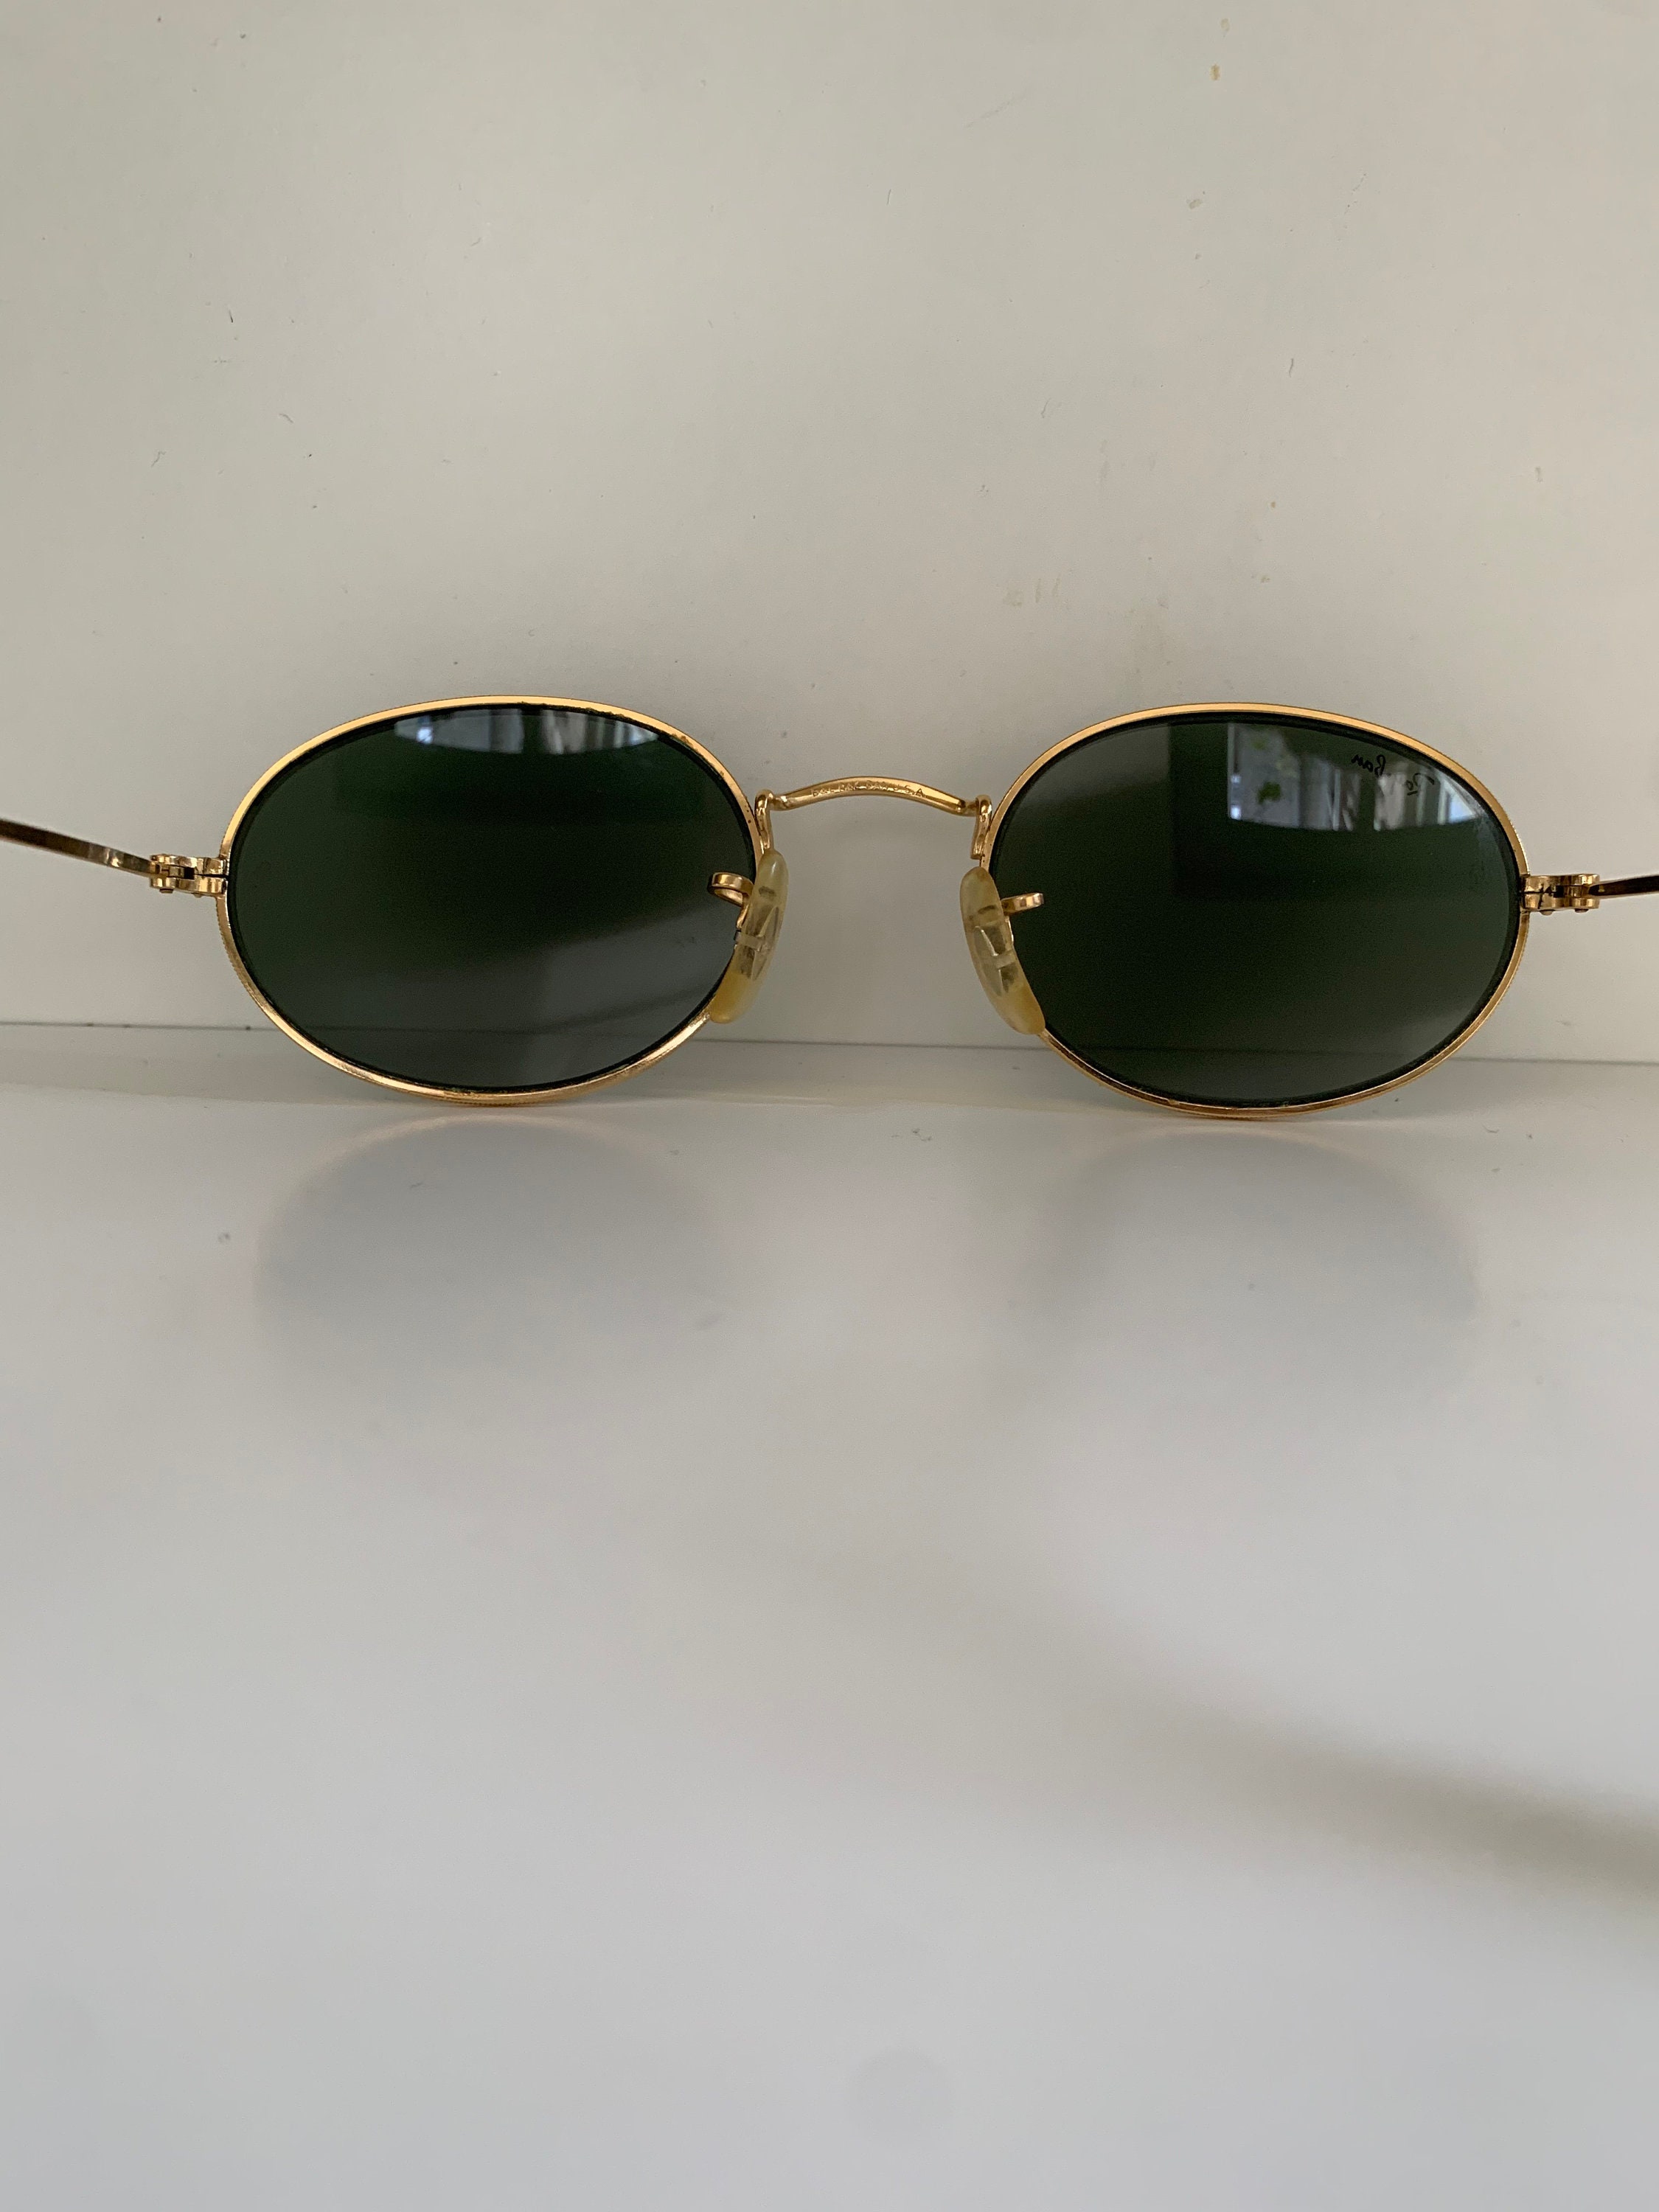 Ray-Ban GLD W0976 sunglasses metal from Japan '5382 | eBay